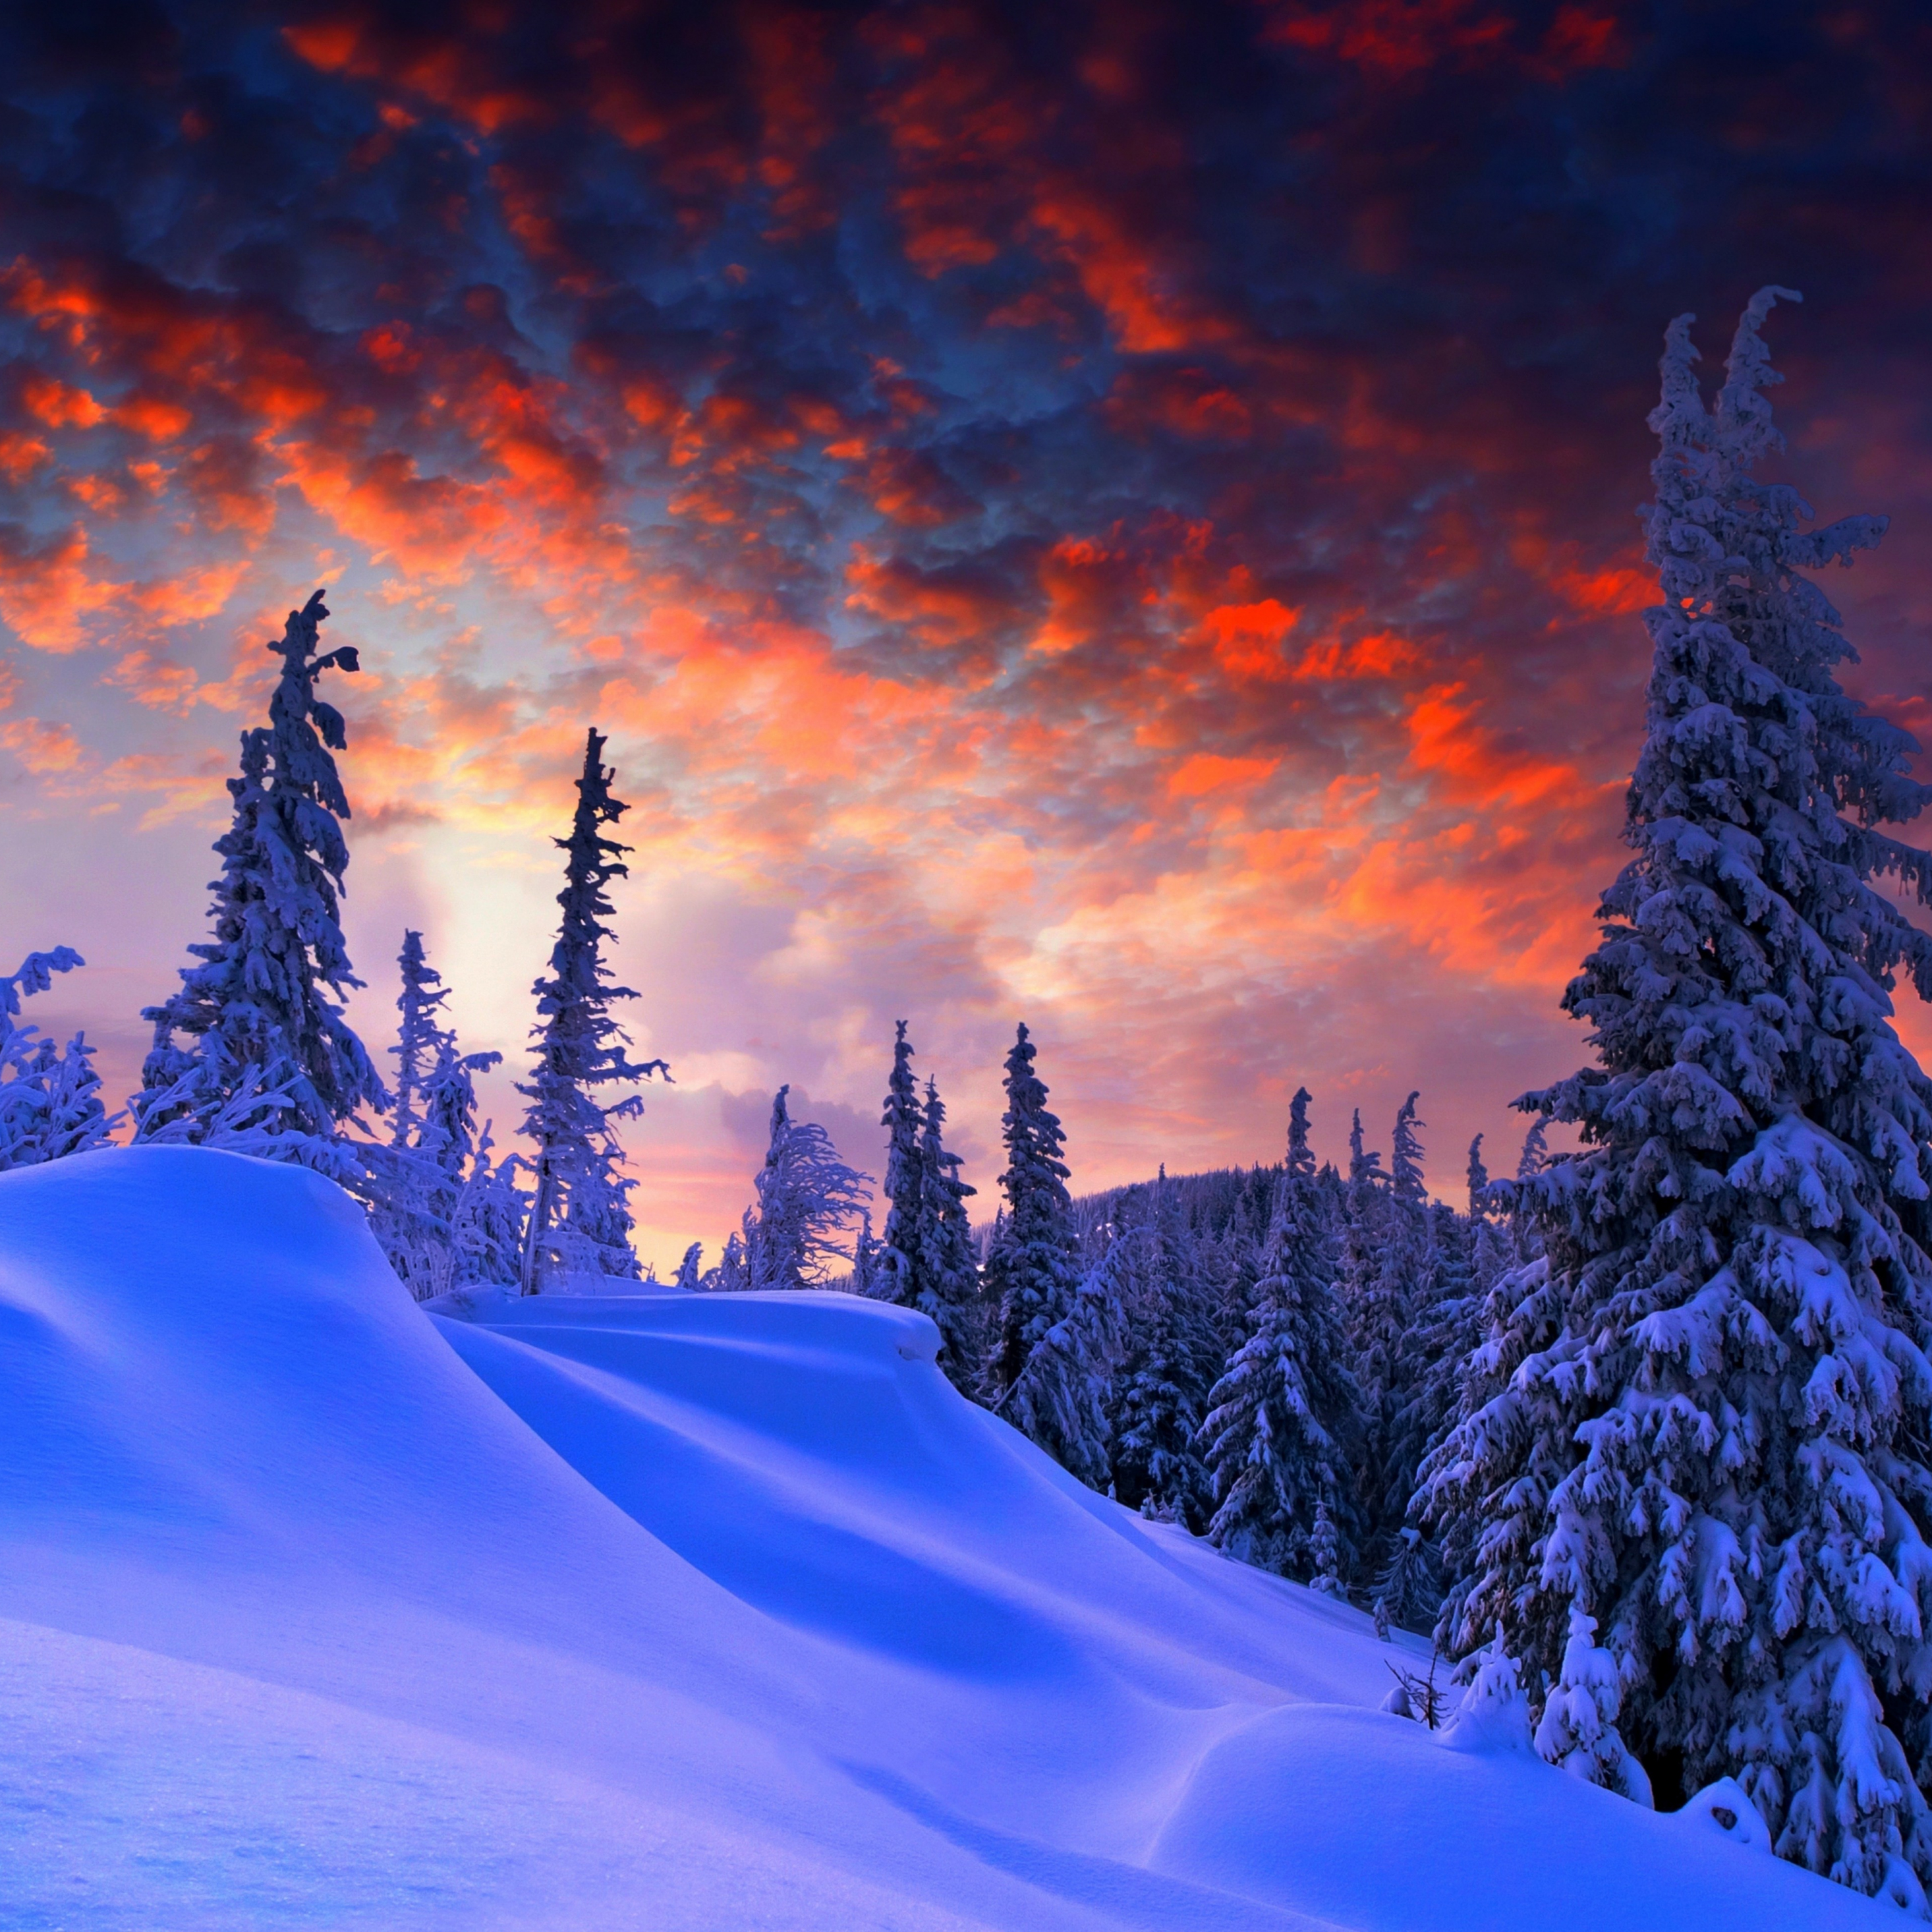 Download 2932x2932 wallpaper winter evening, beautiful sky, trees, clouds, ipad pro retina, 2932x2932 HD image, background, 1199